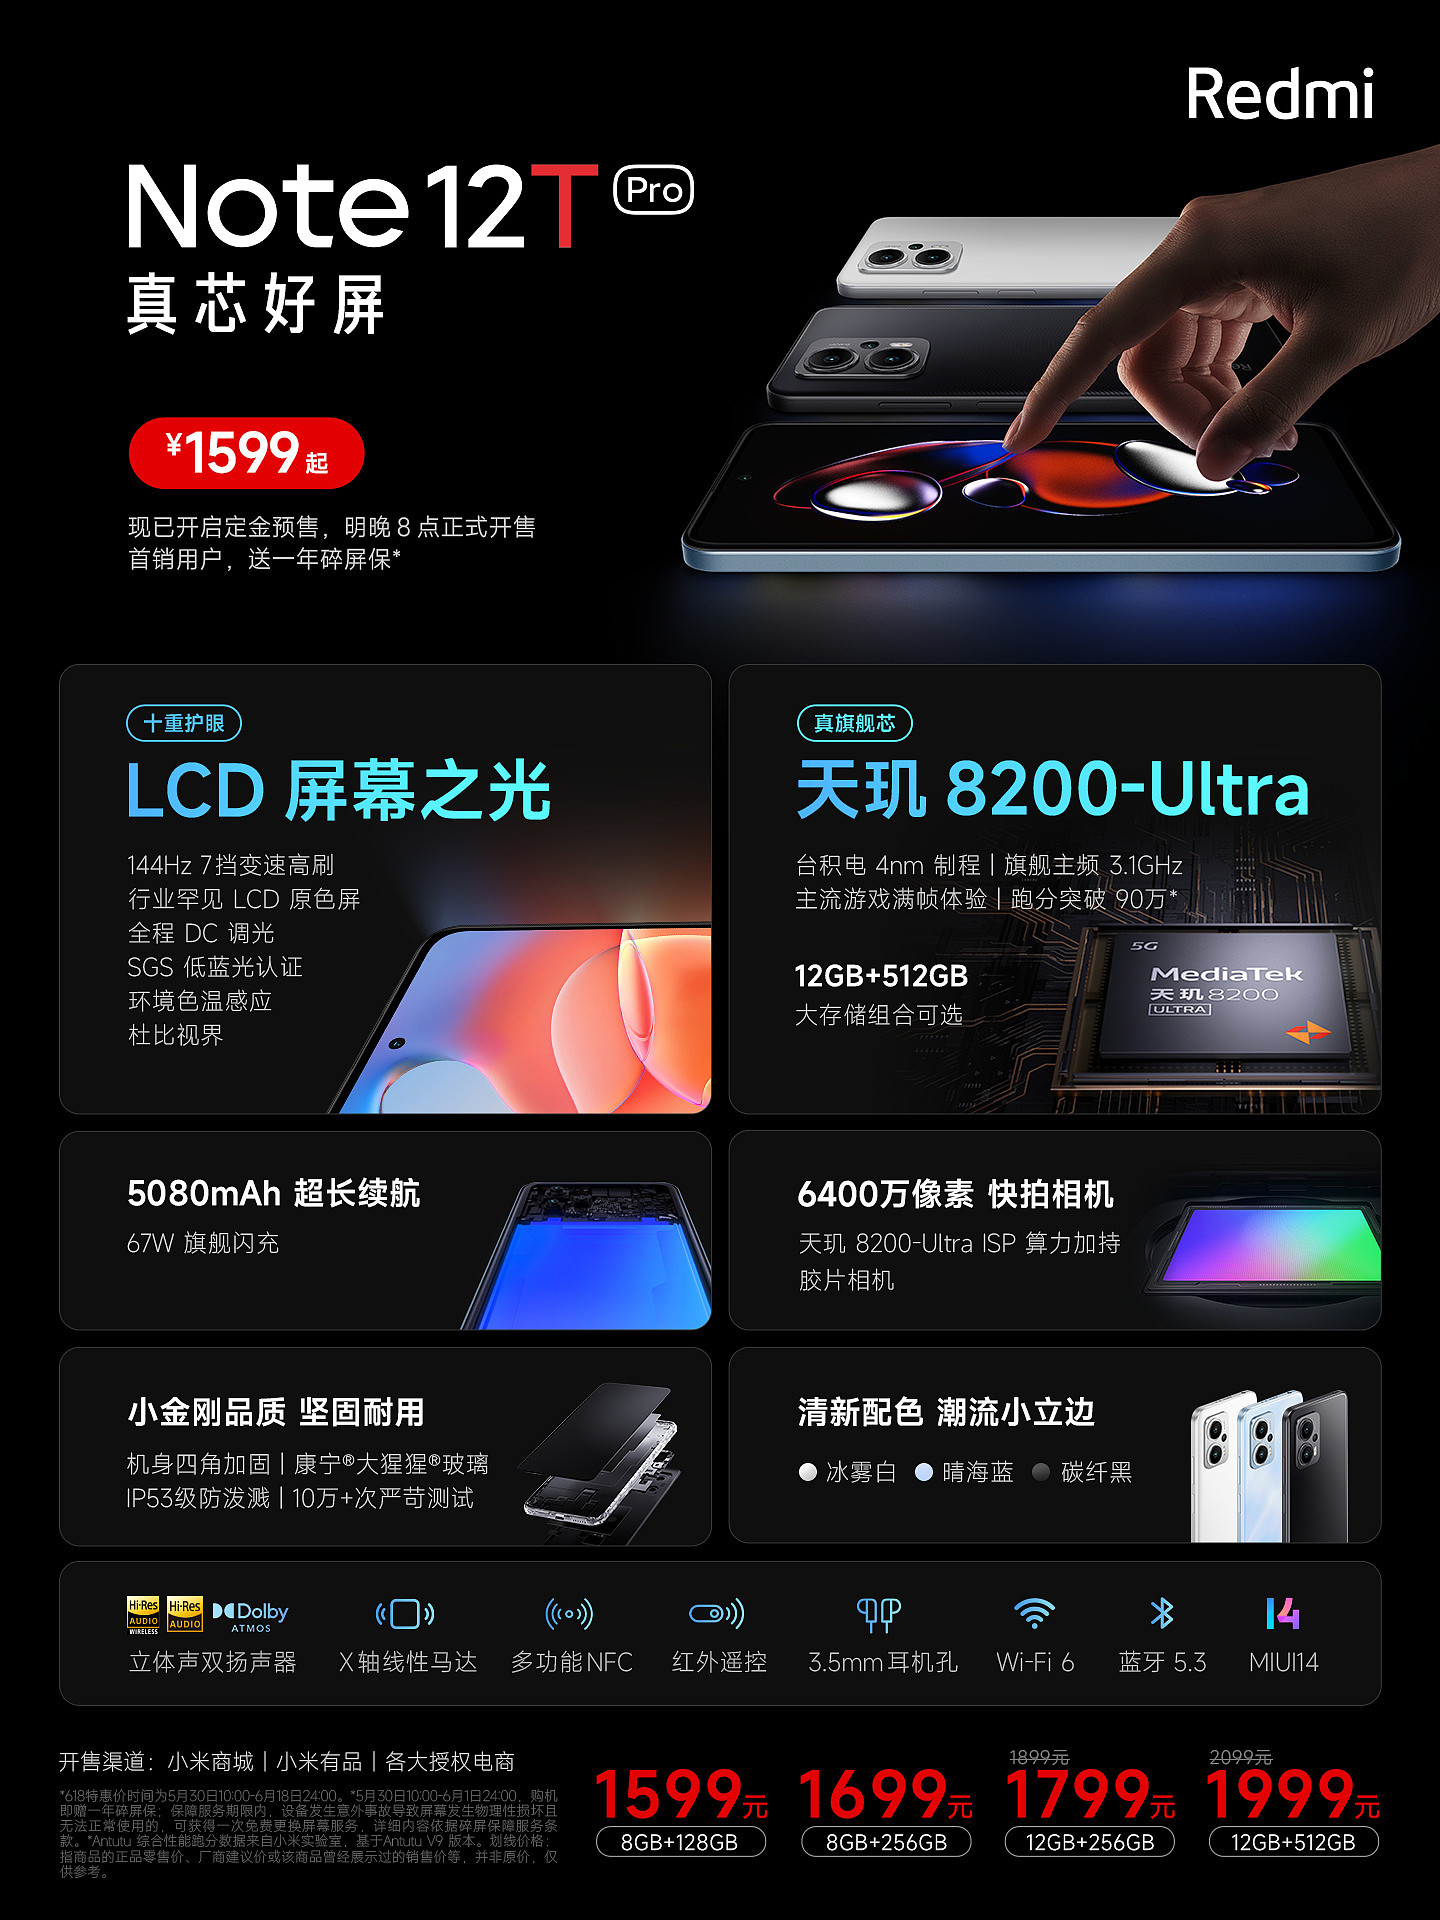 12G 版仅 1249 元：Redmi Note 12T Pro 手机年货节好价（减 650 元） - 1